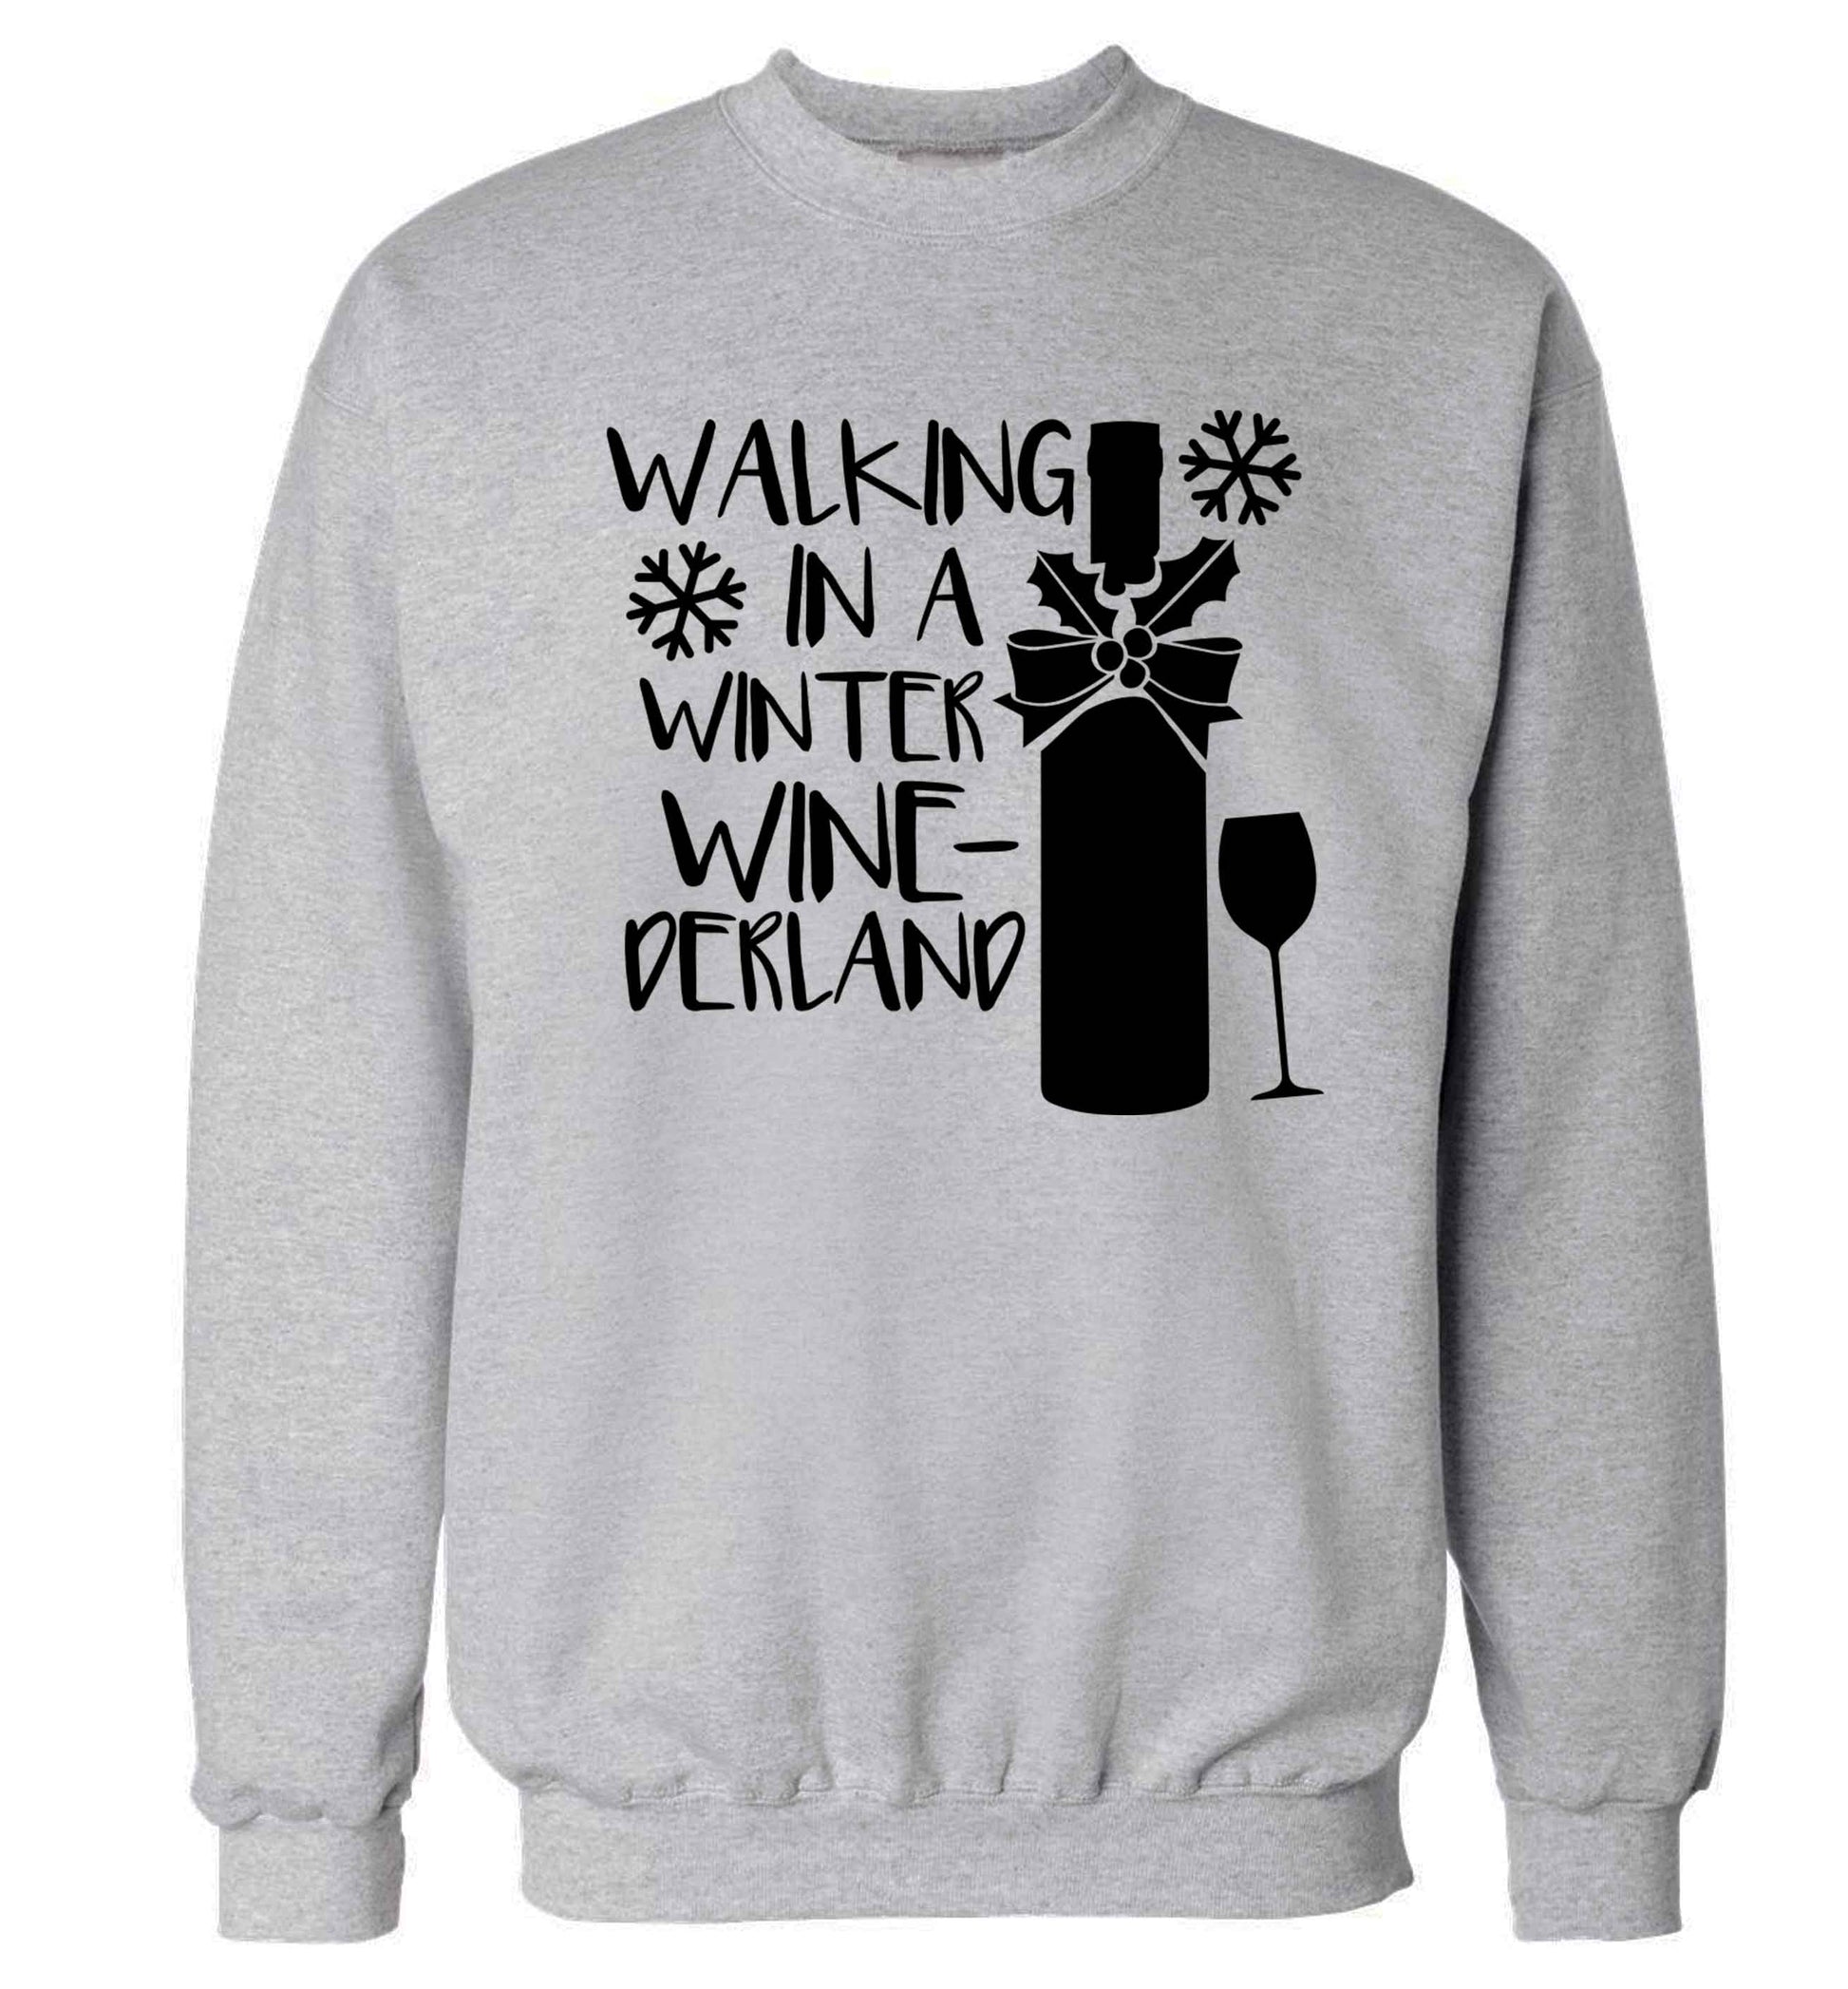 Walking in a wine-derwonderland Adult's unisex grey Sweater 2XL